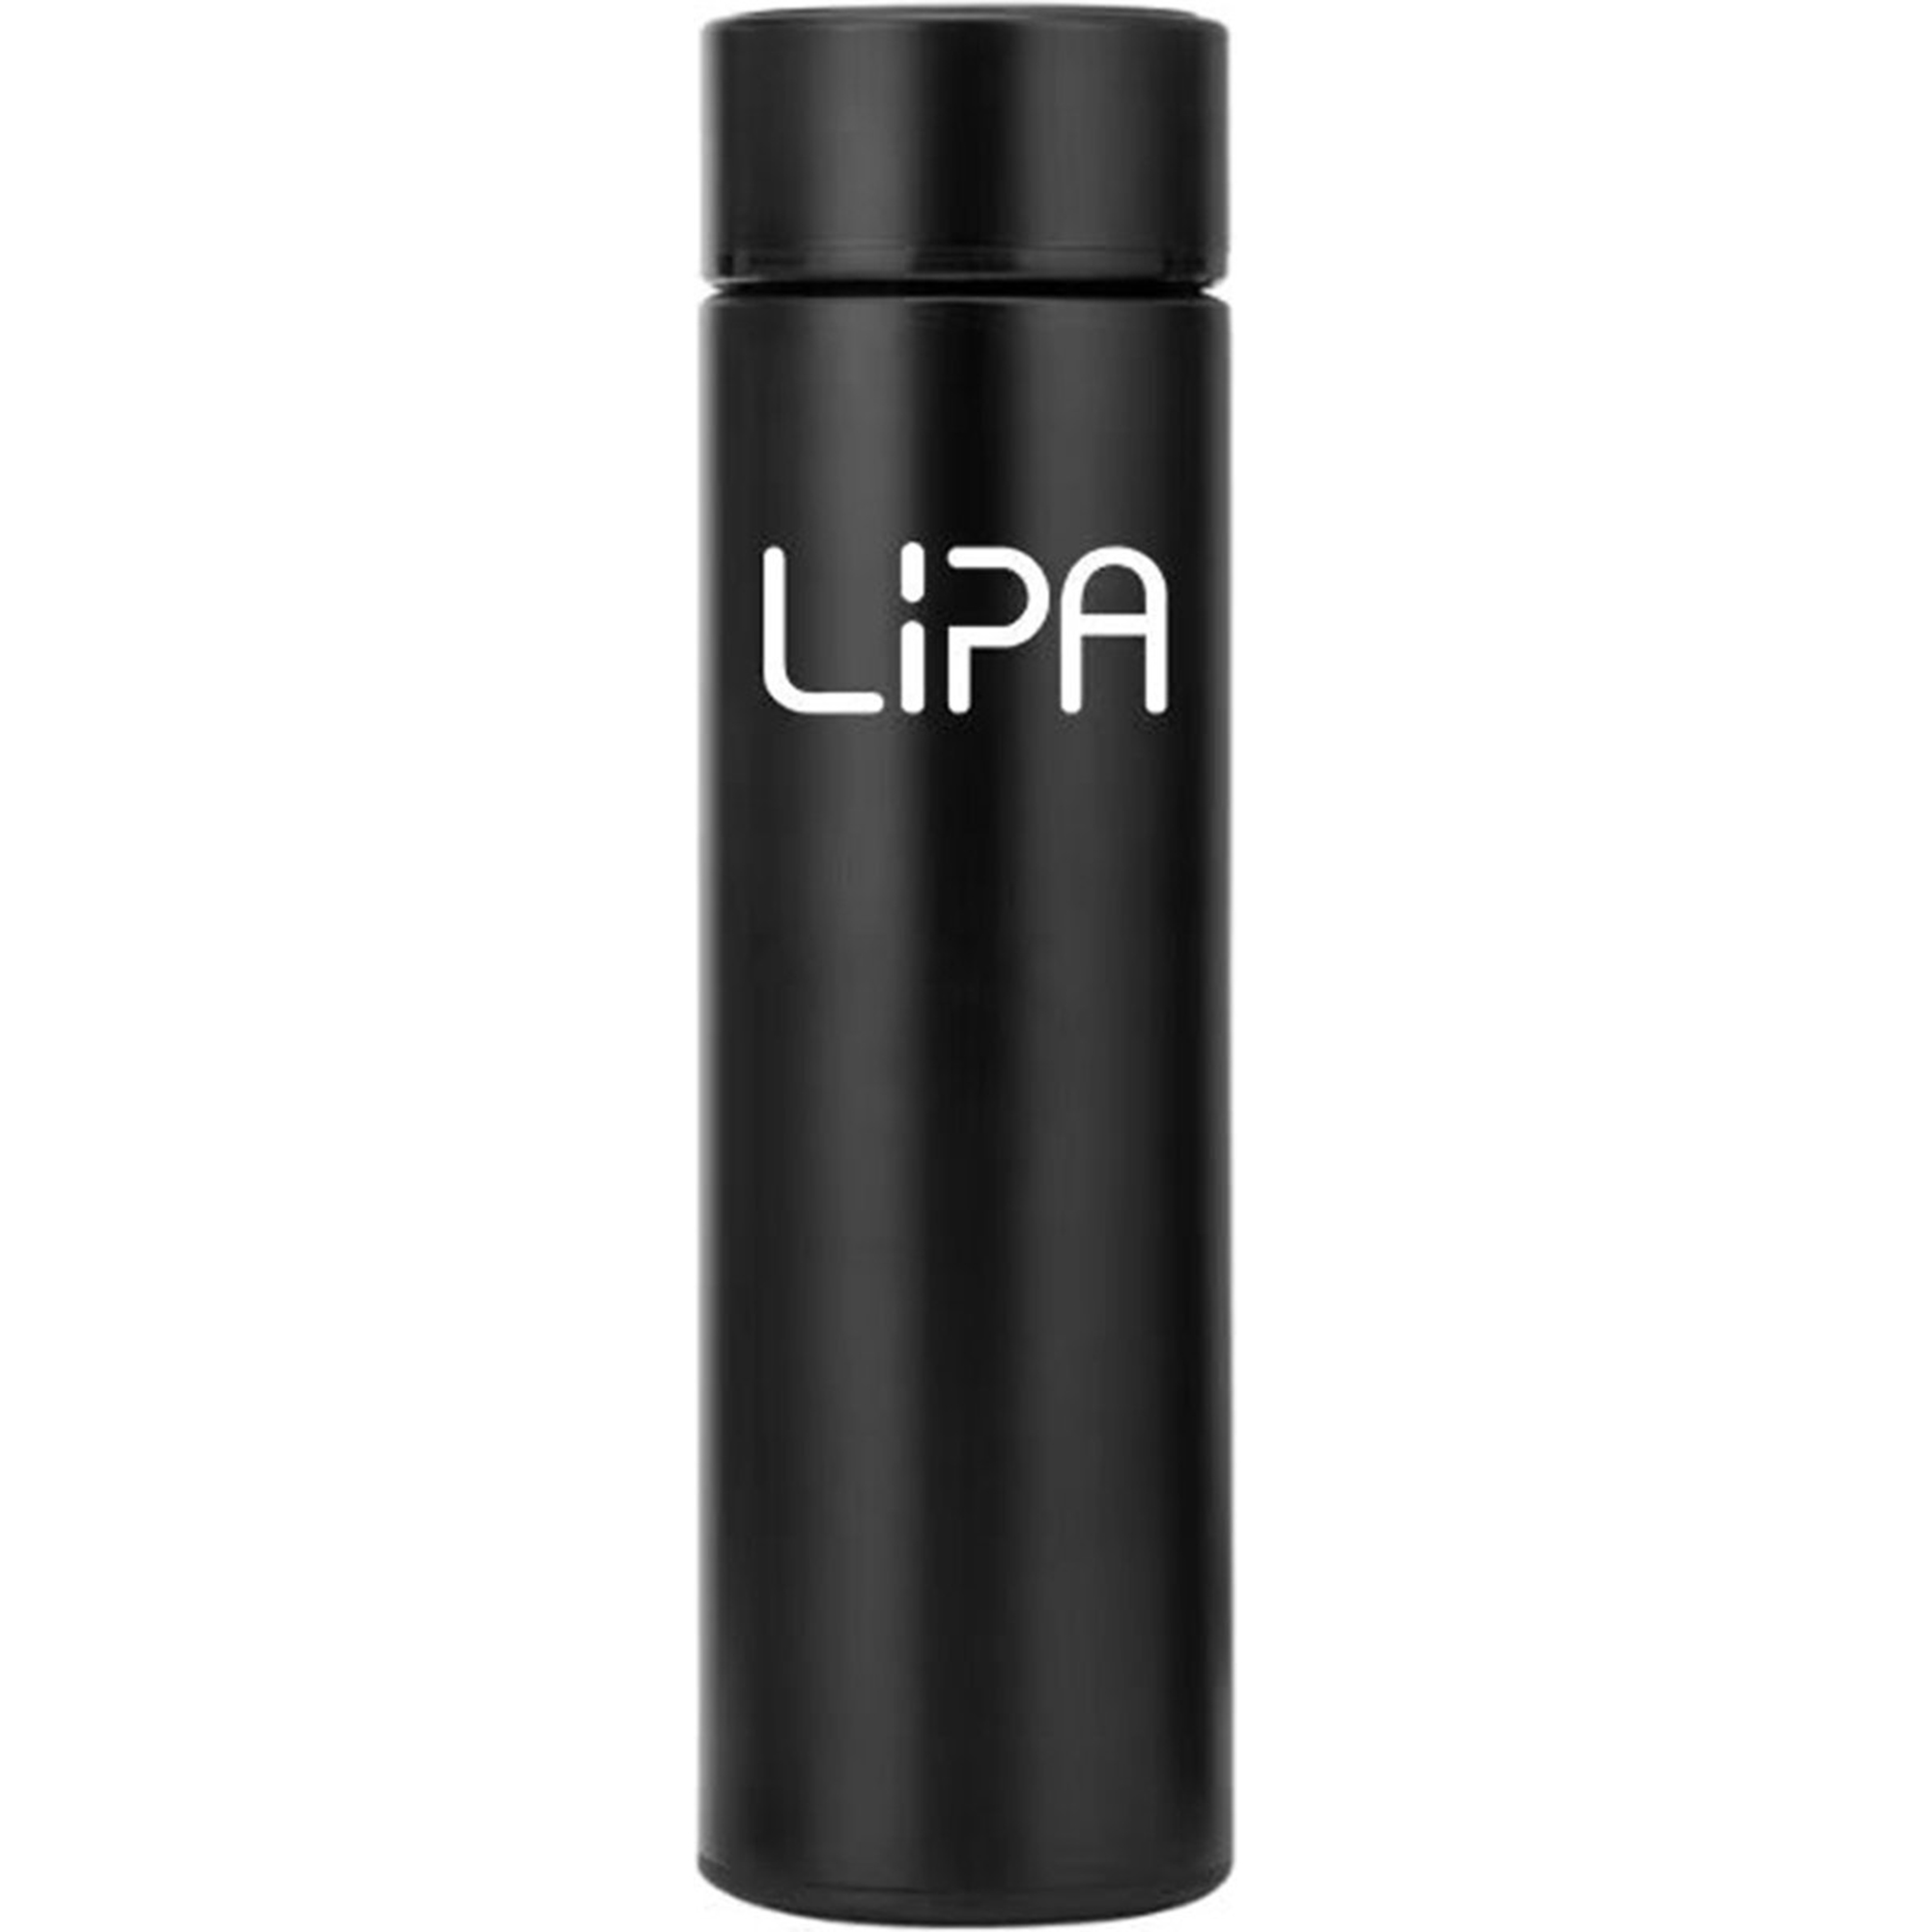 LIPA Isolierflasche FT1 0,5 Thermosflasche Liter